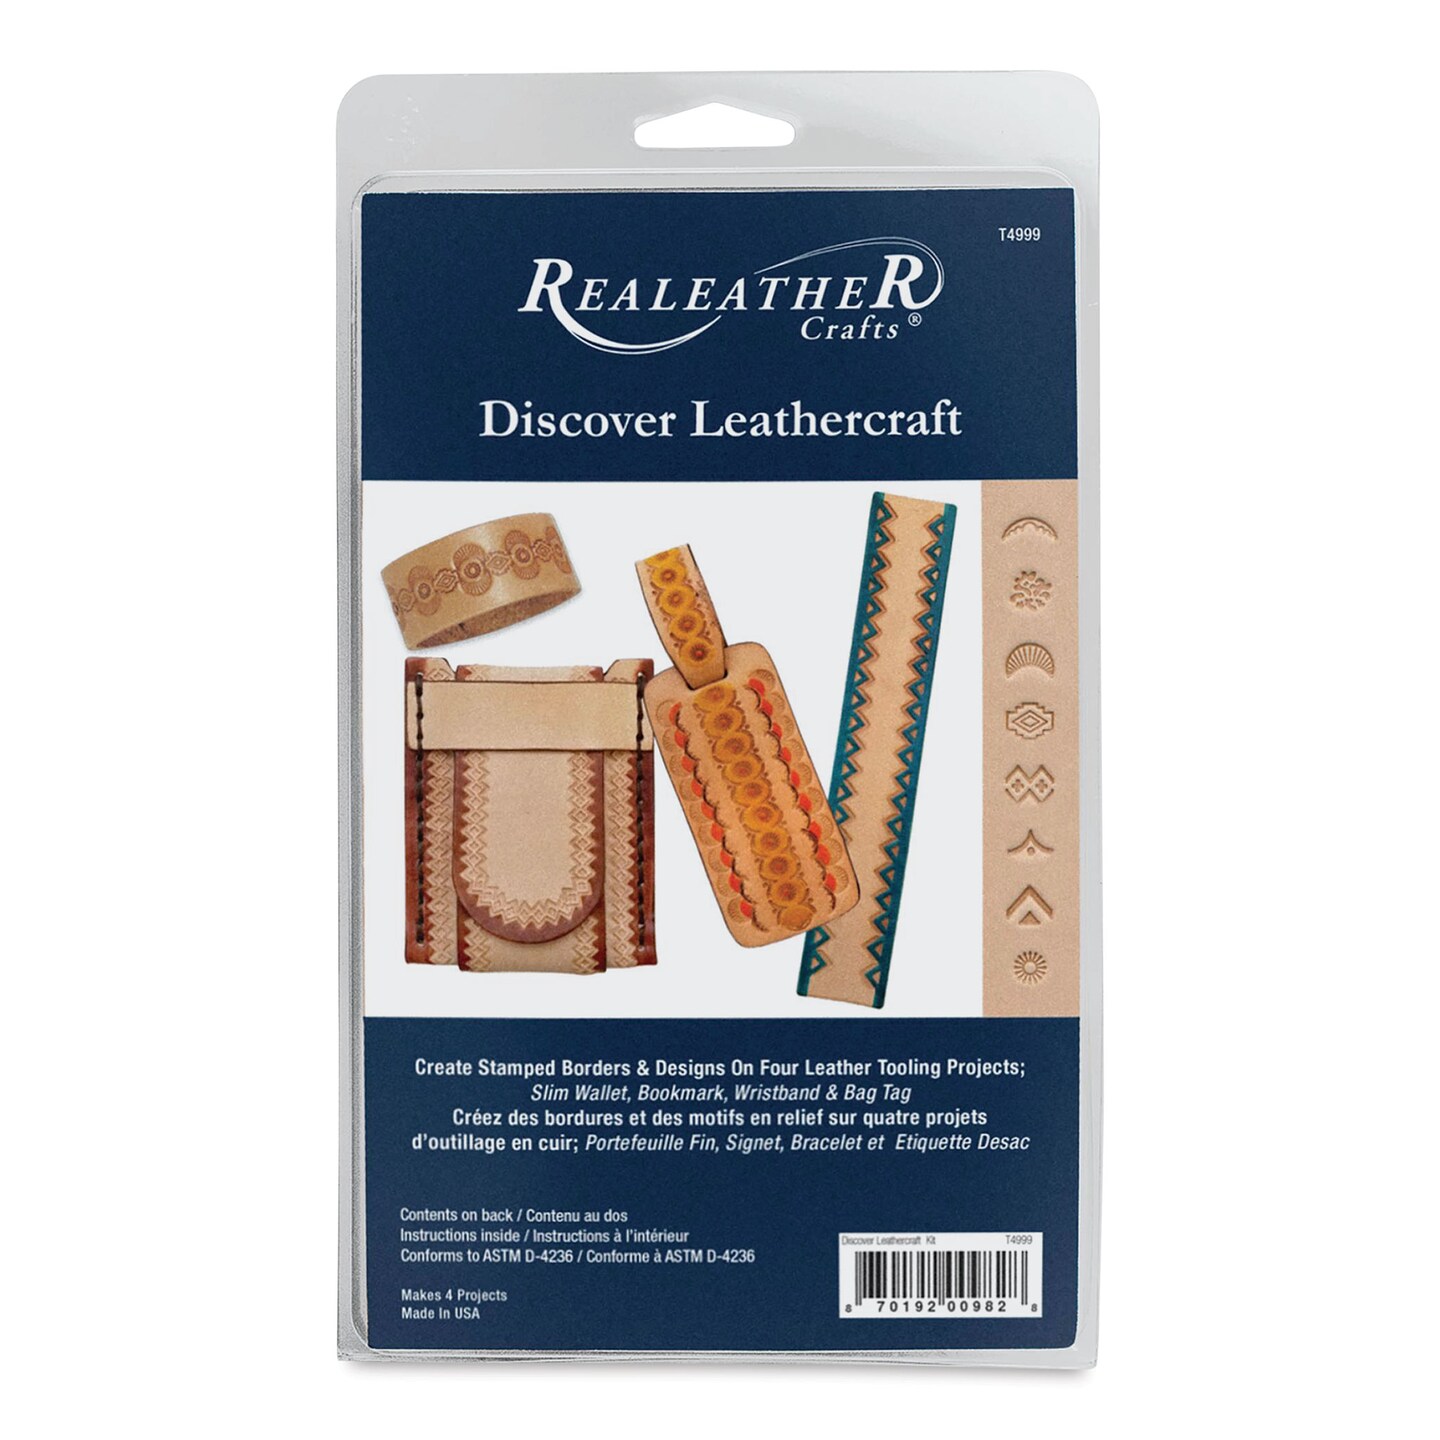 Realeather Discover Leathercraft Kit